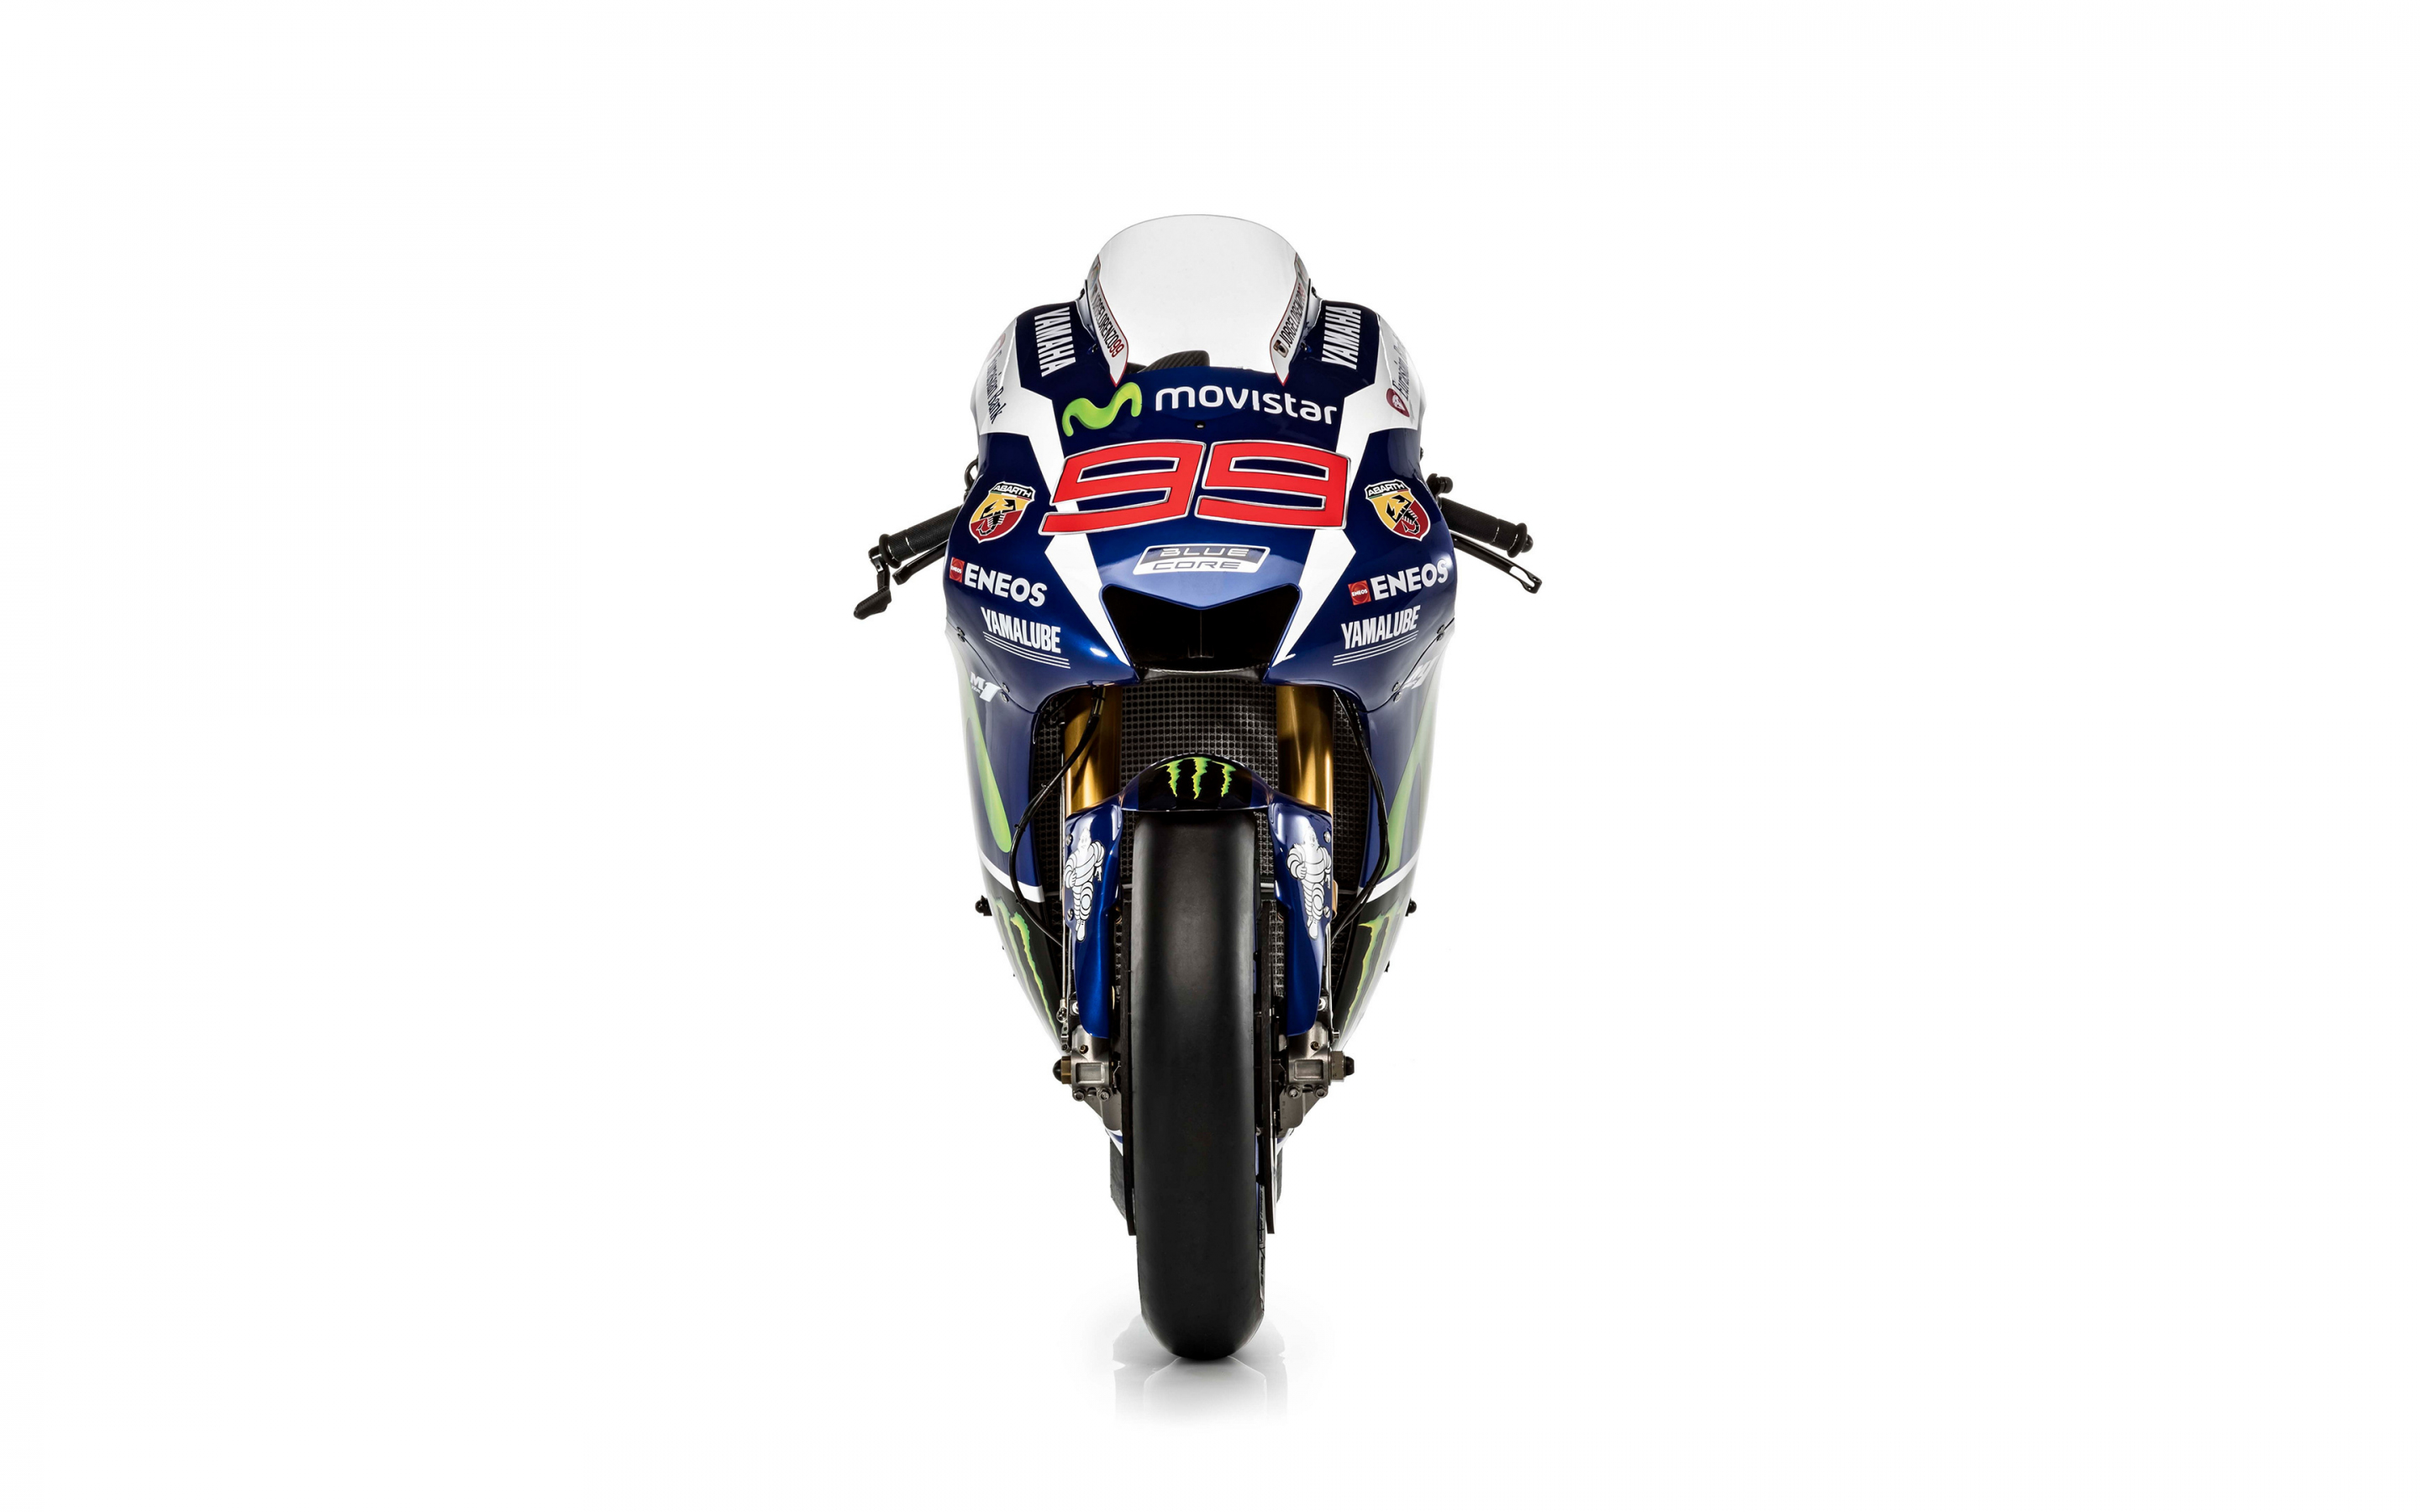 Motogp, race bike, Yamaha YZR-M1, 2880x1800 wallpaper